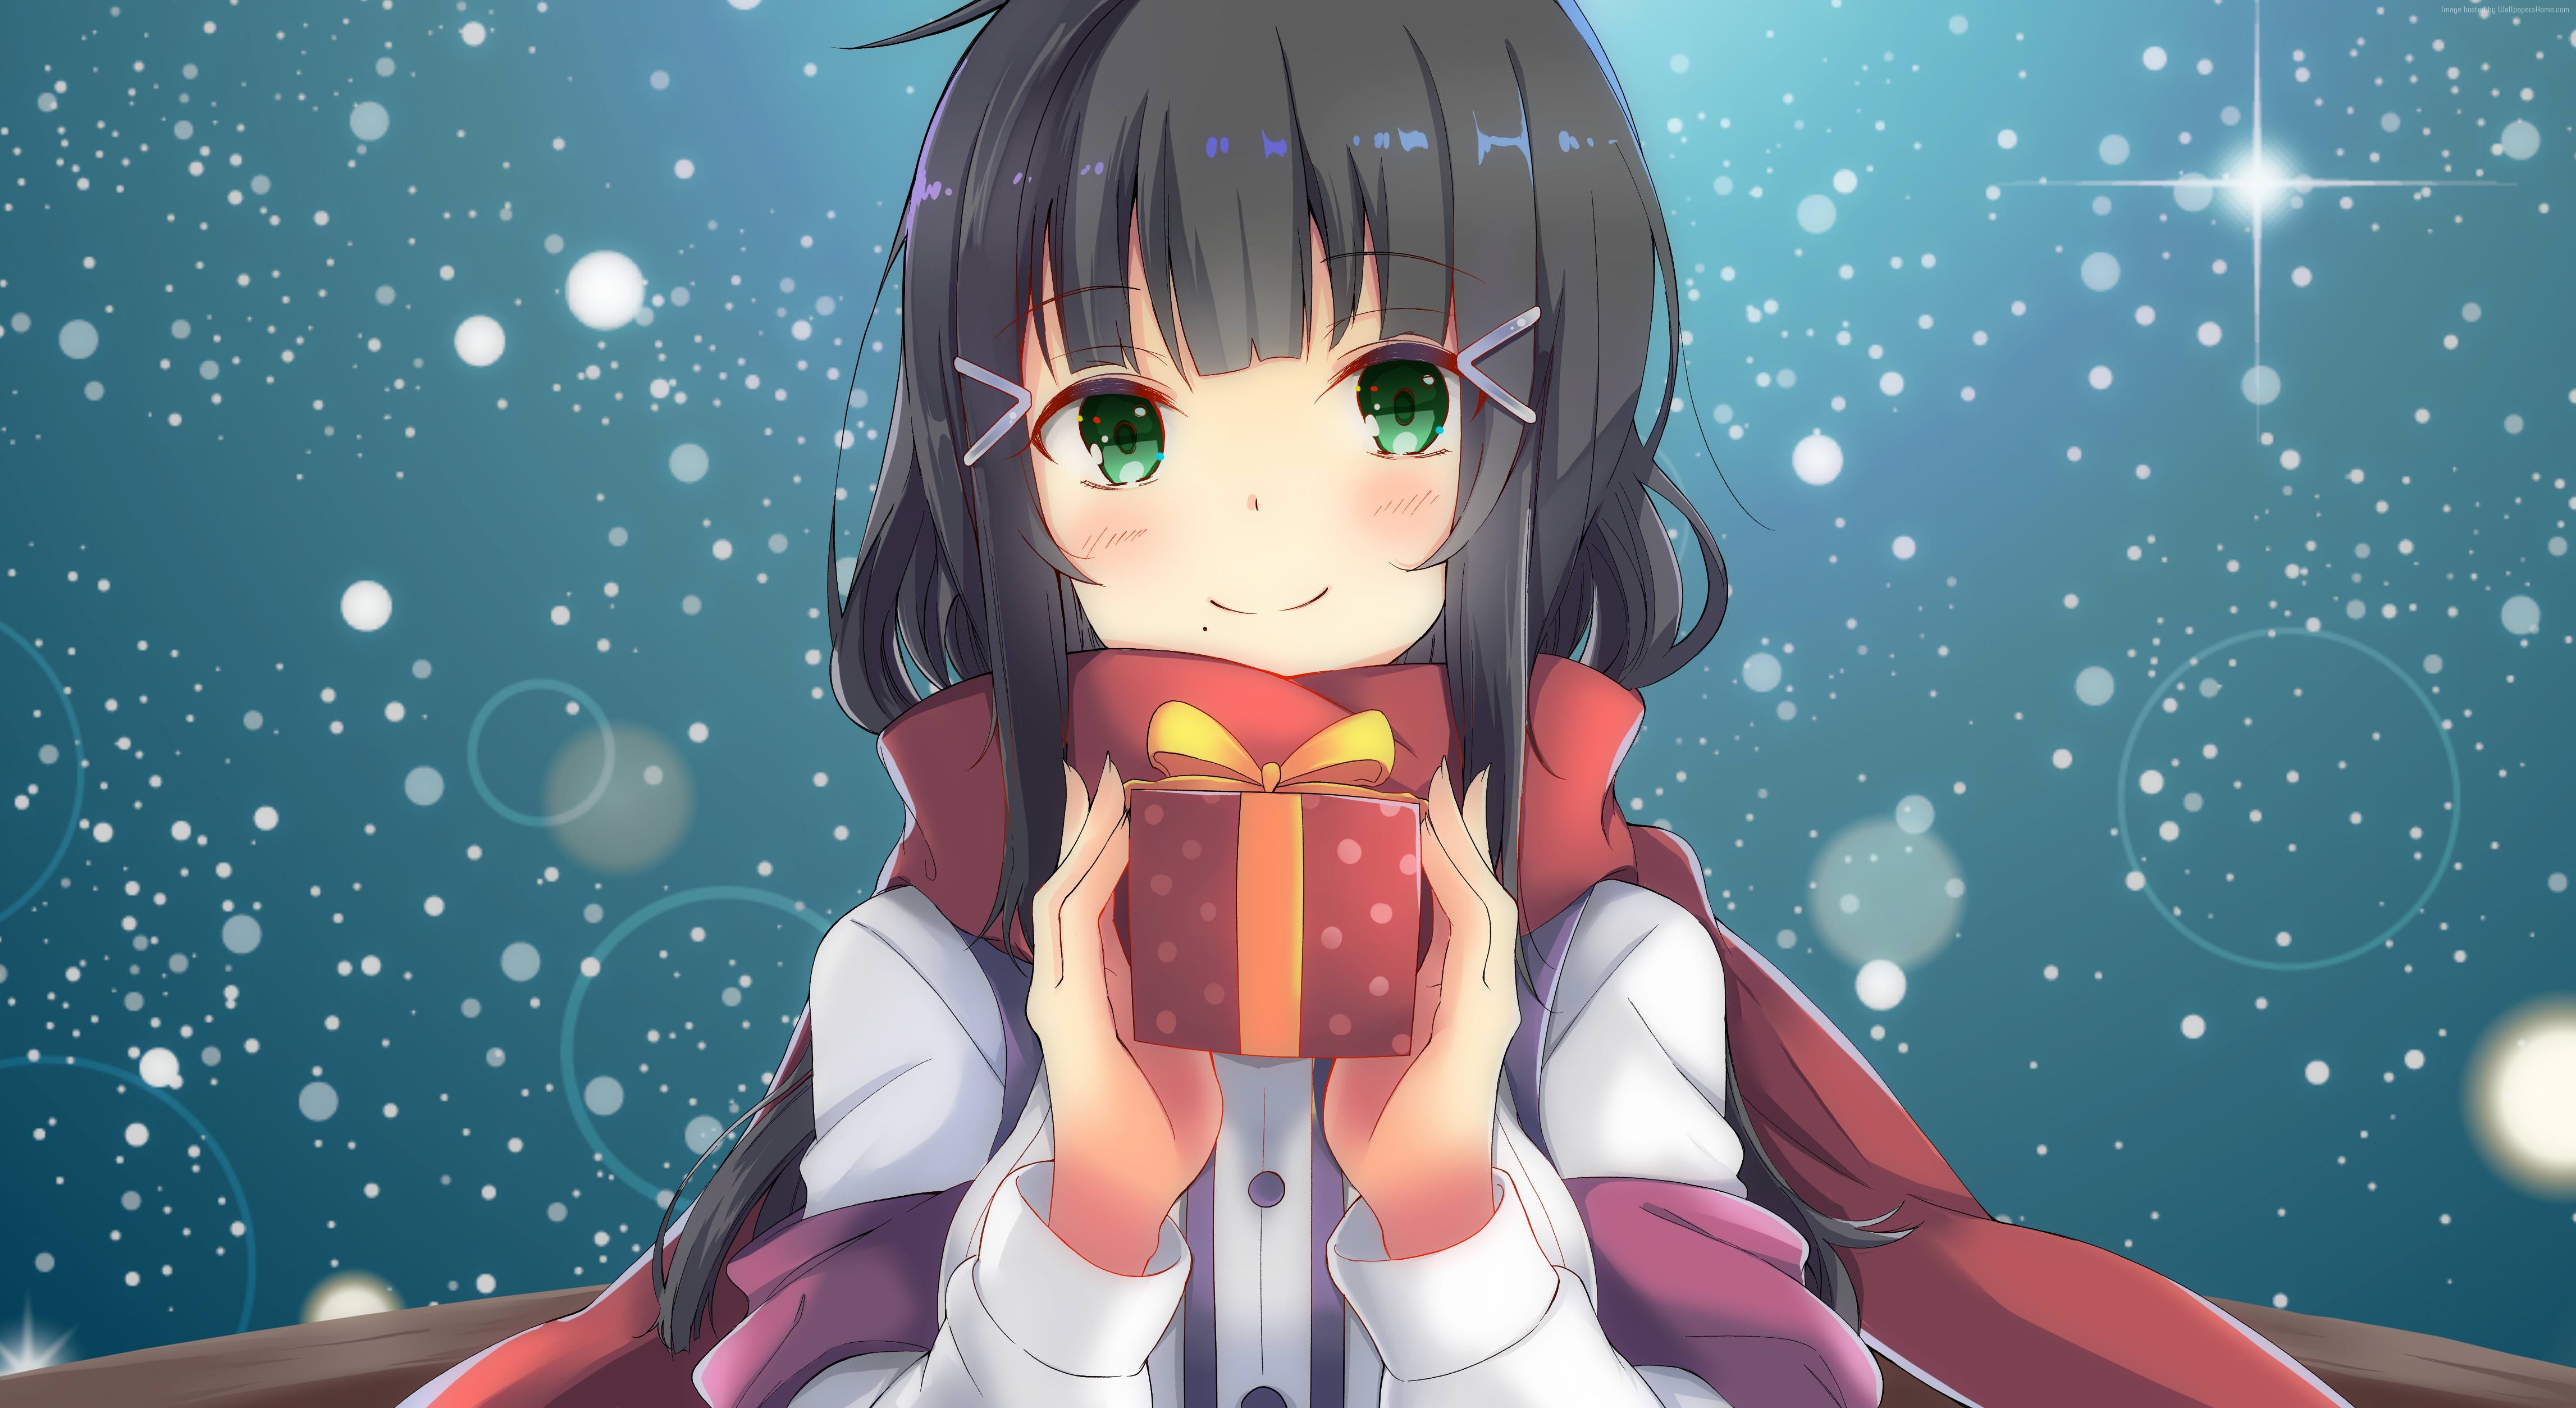 Anime 4588x2507 anime anime girls green eyes presents Christmas dark hair snow